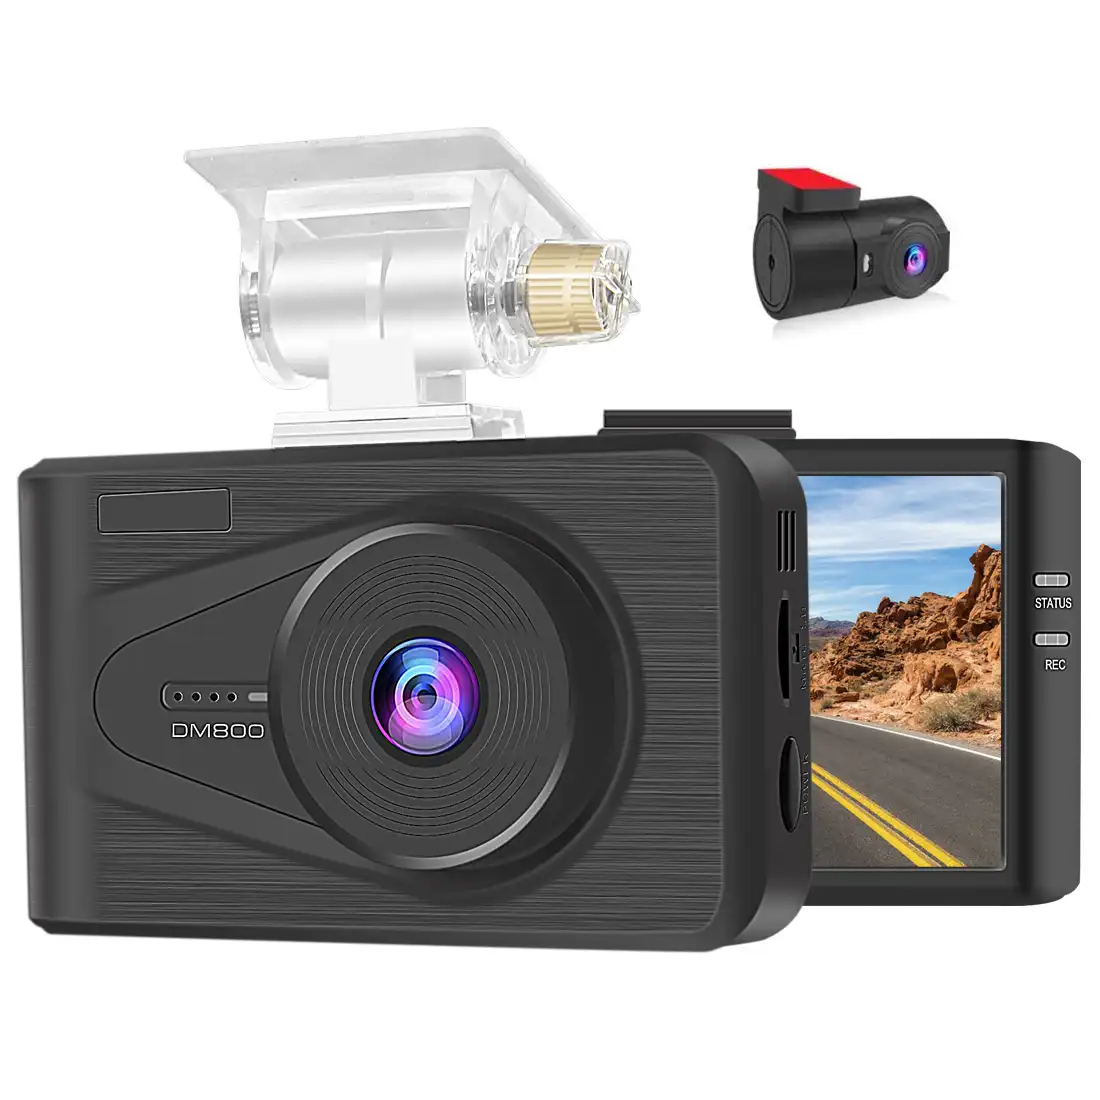 Sony חיישן הכפול רכב Dvr 1080P 2 אינץ לוח מחוונים מצלמה רכב קופסא שחורה dvr לרכב סין ספק מקצועי